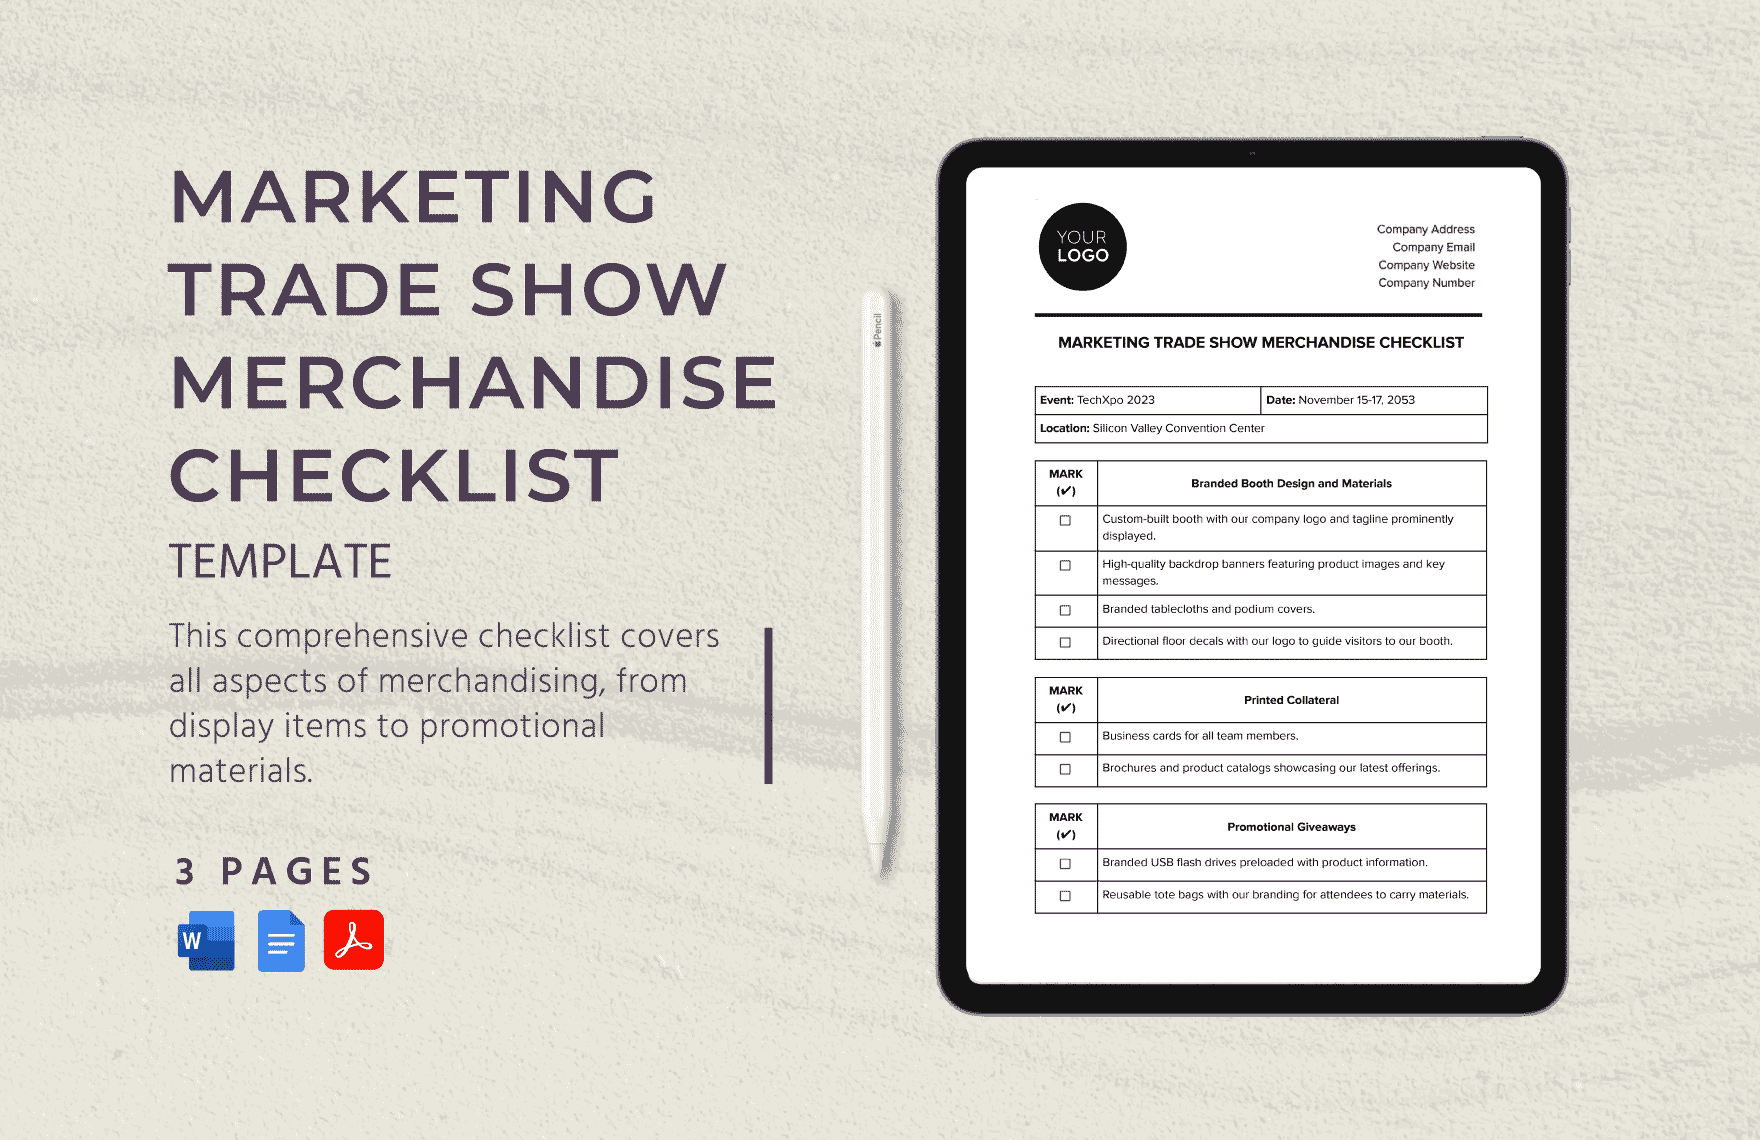 Marketing Trade Show Merchandise Checklist Template in Word, Google Docs, PDF